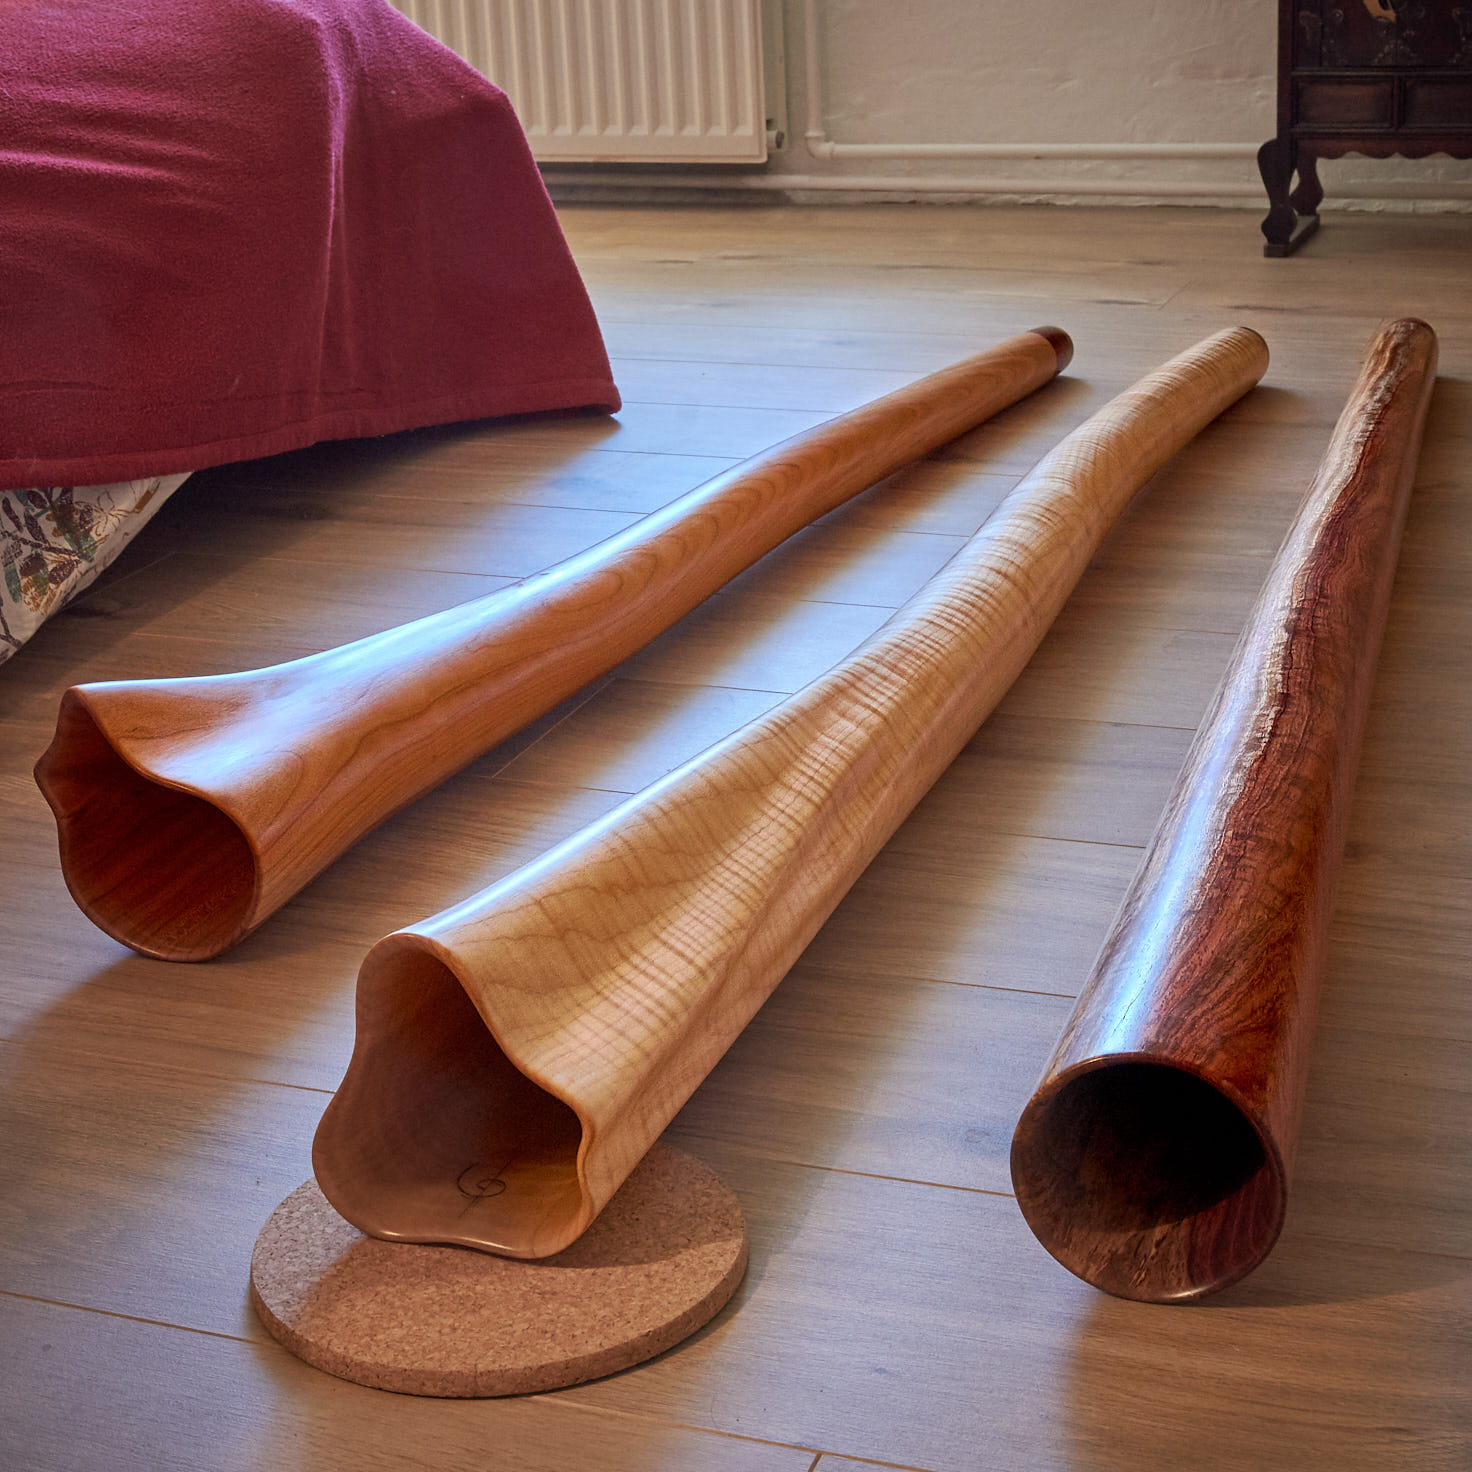 Trois didgeridoo disponible en Janvier 2020 : Ré# en merisier, Do en érable ondé, Do en bubinga moiré